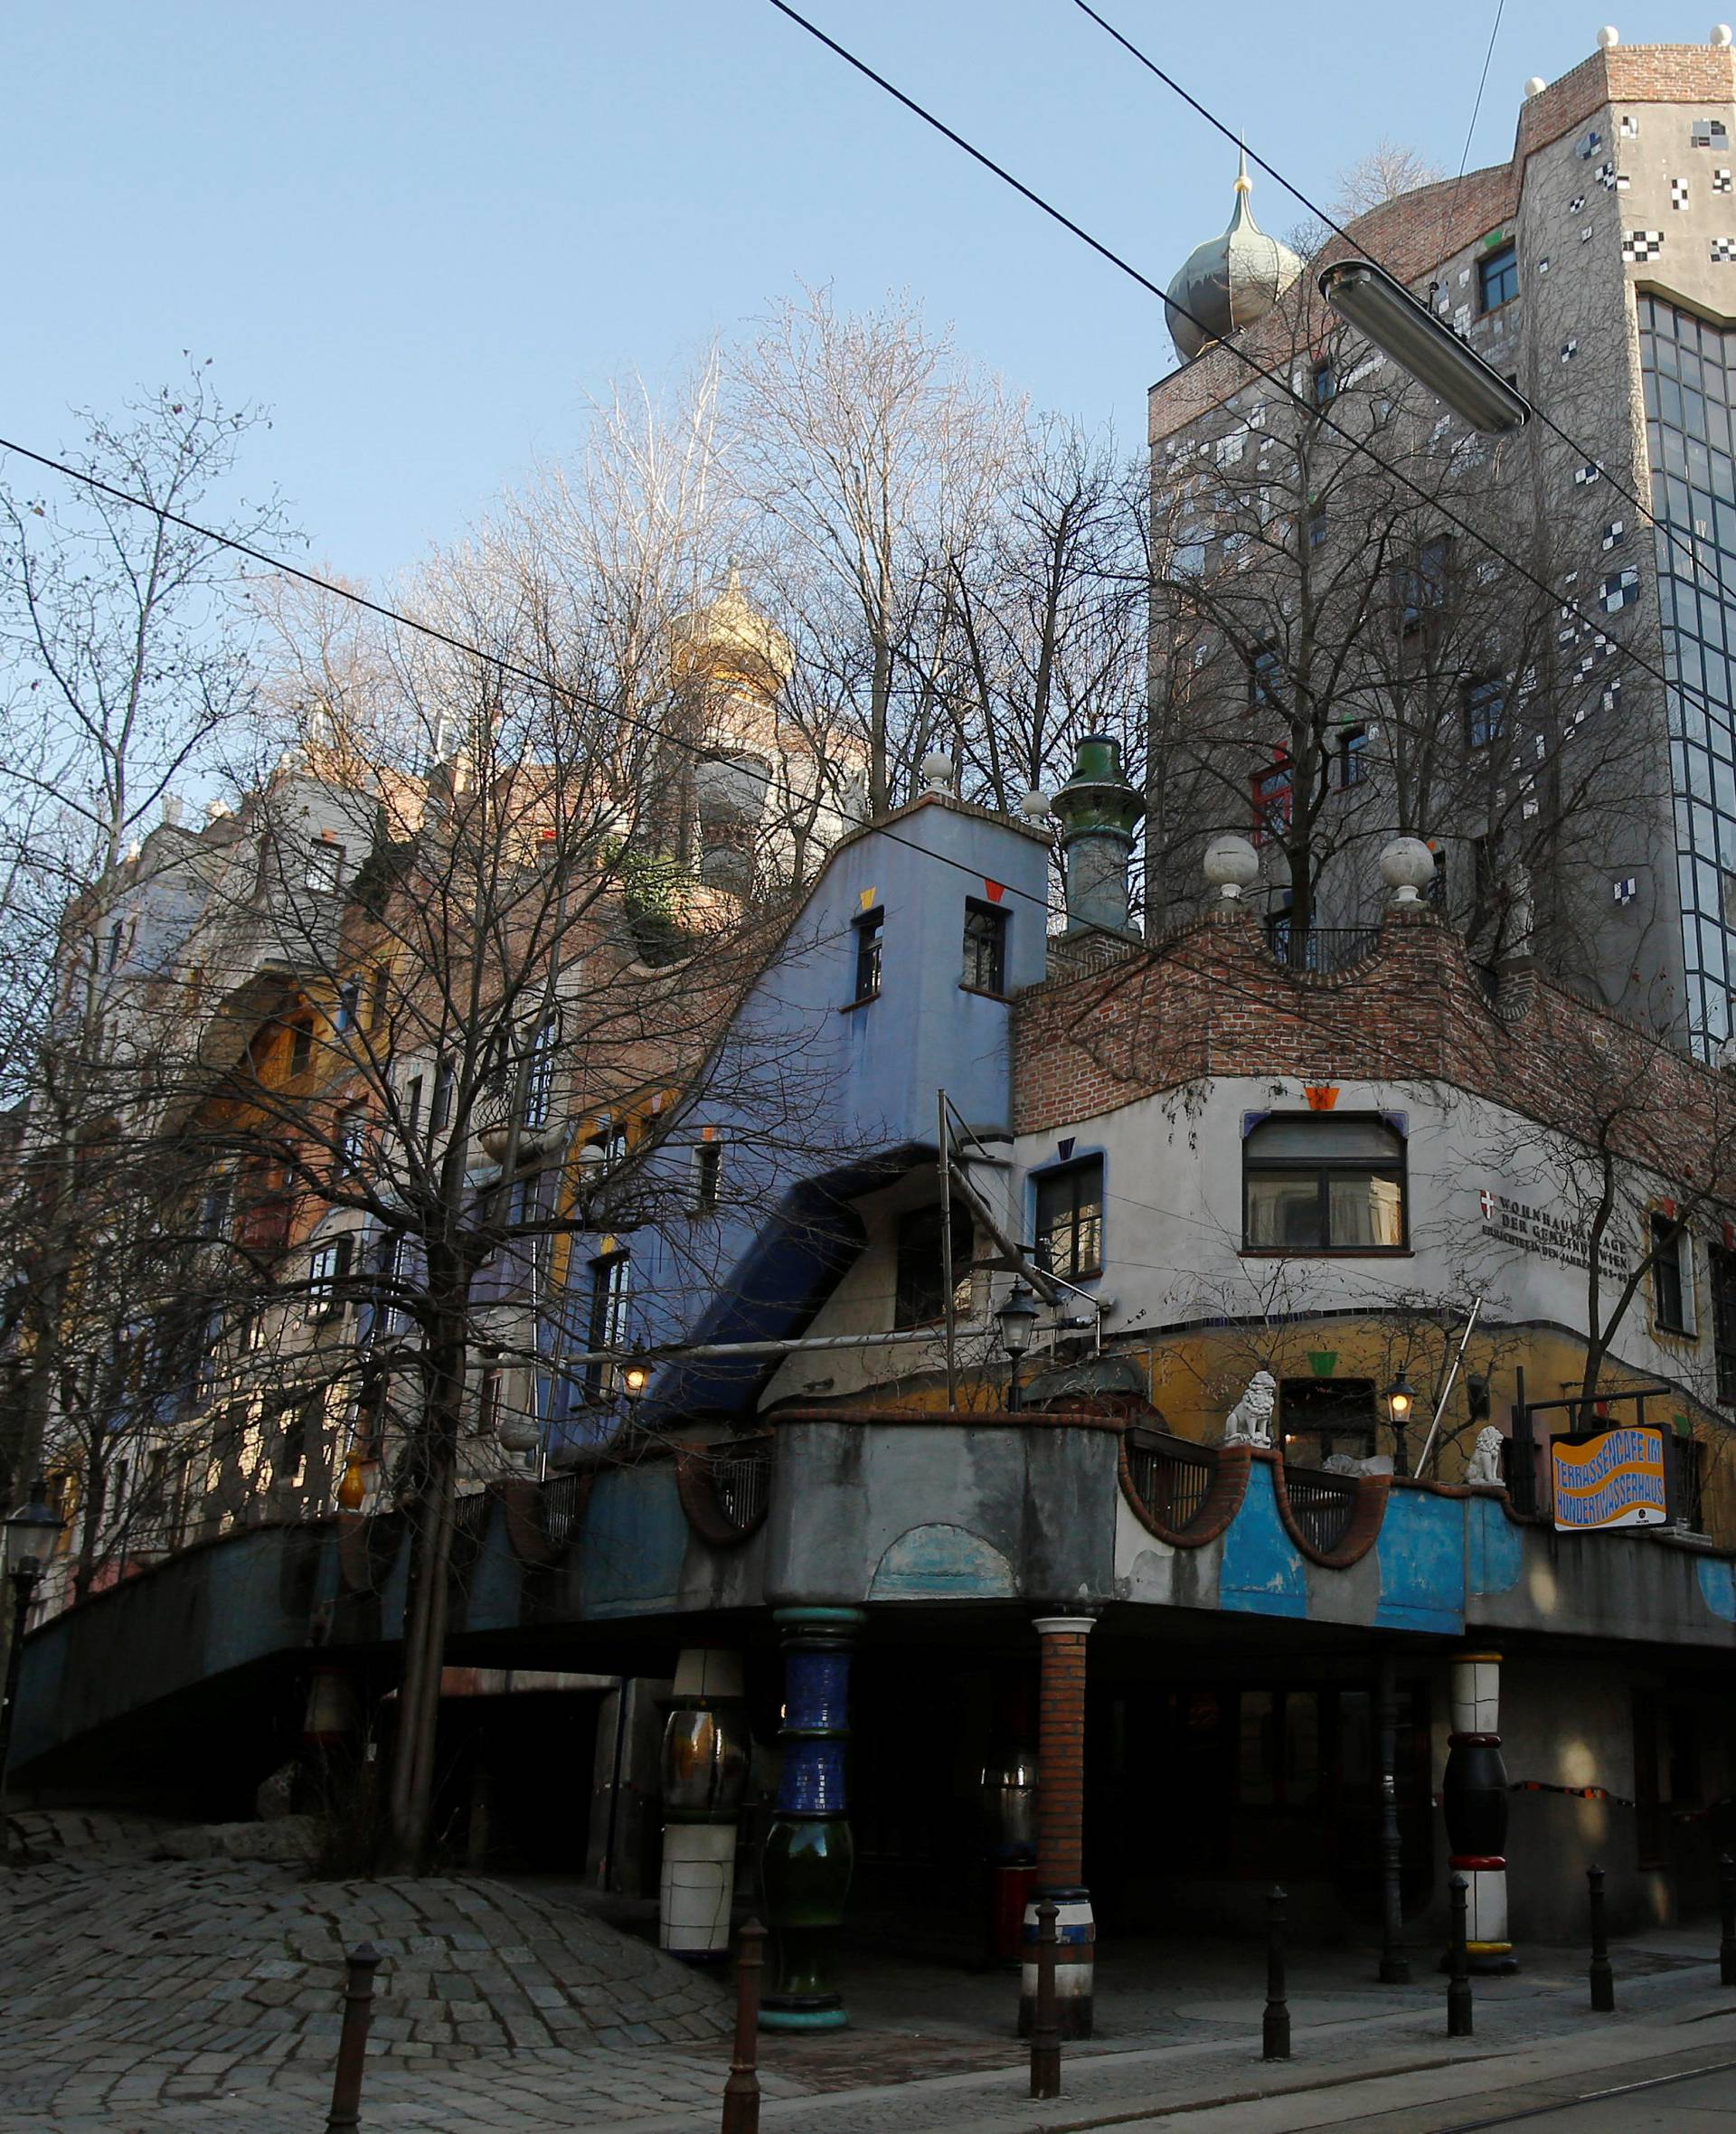 The Hundertwasser House landmark is seen in Vienna